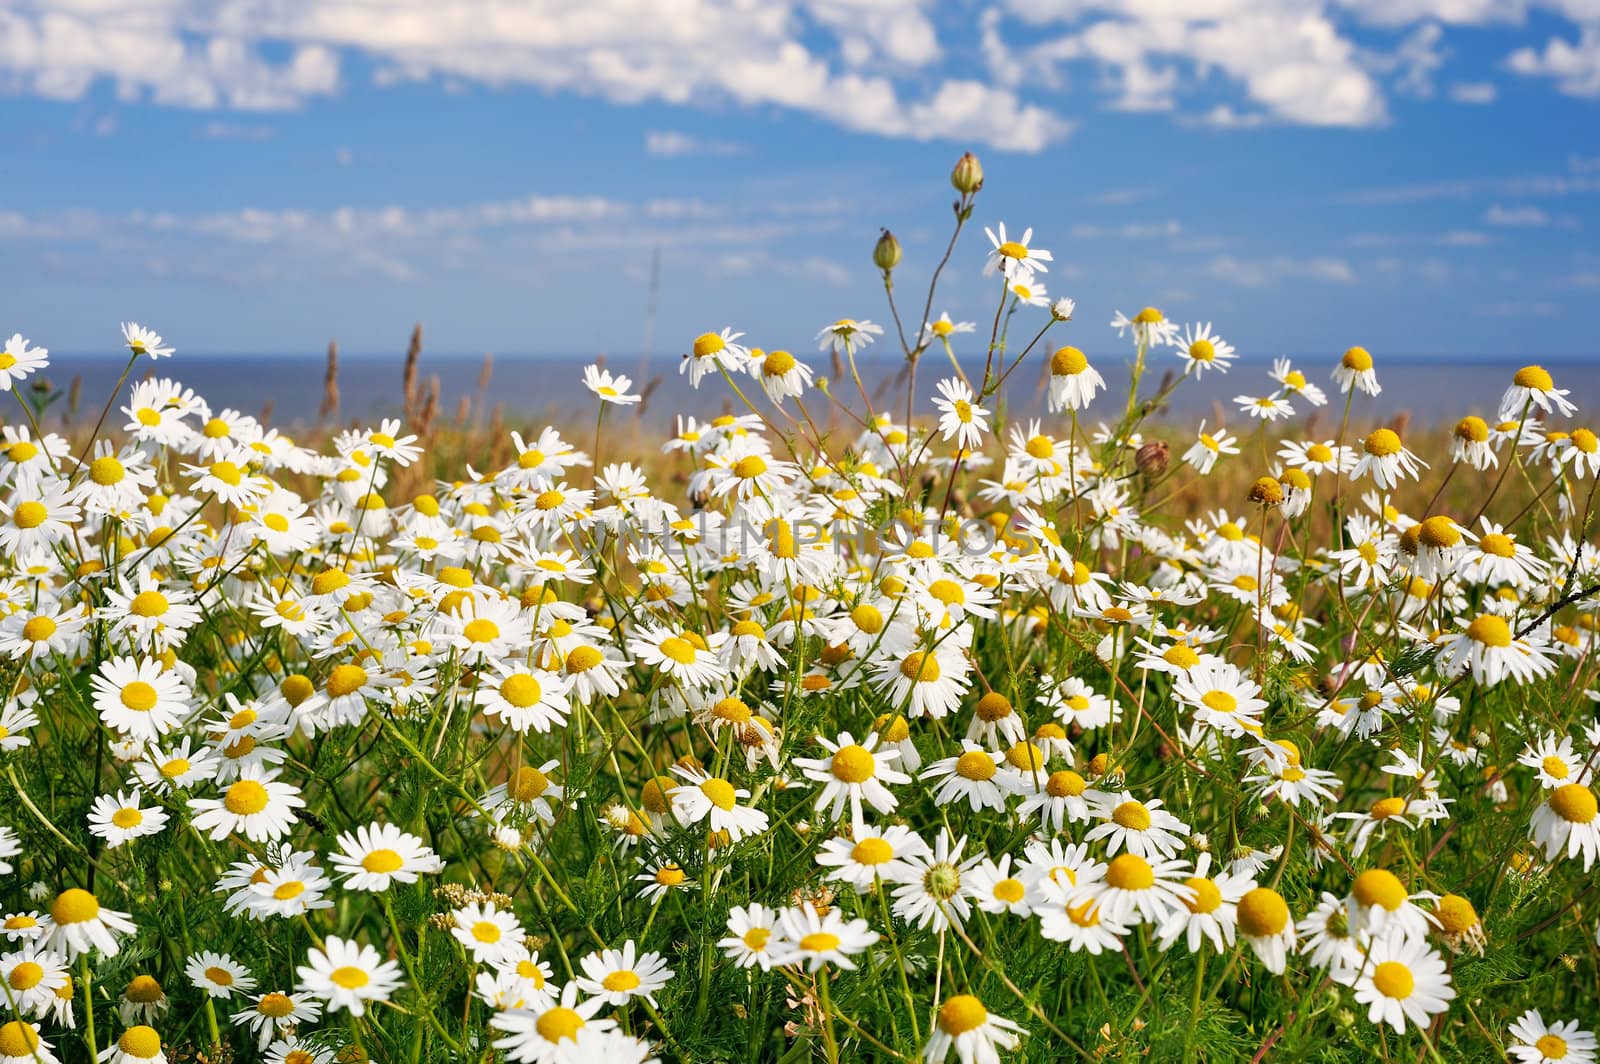 Flowers daisy in a meadow near coastline in the sunny day